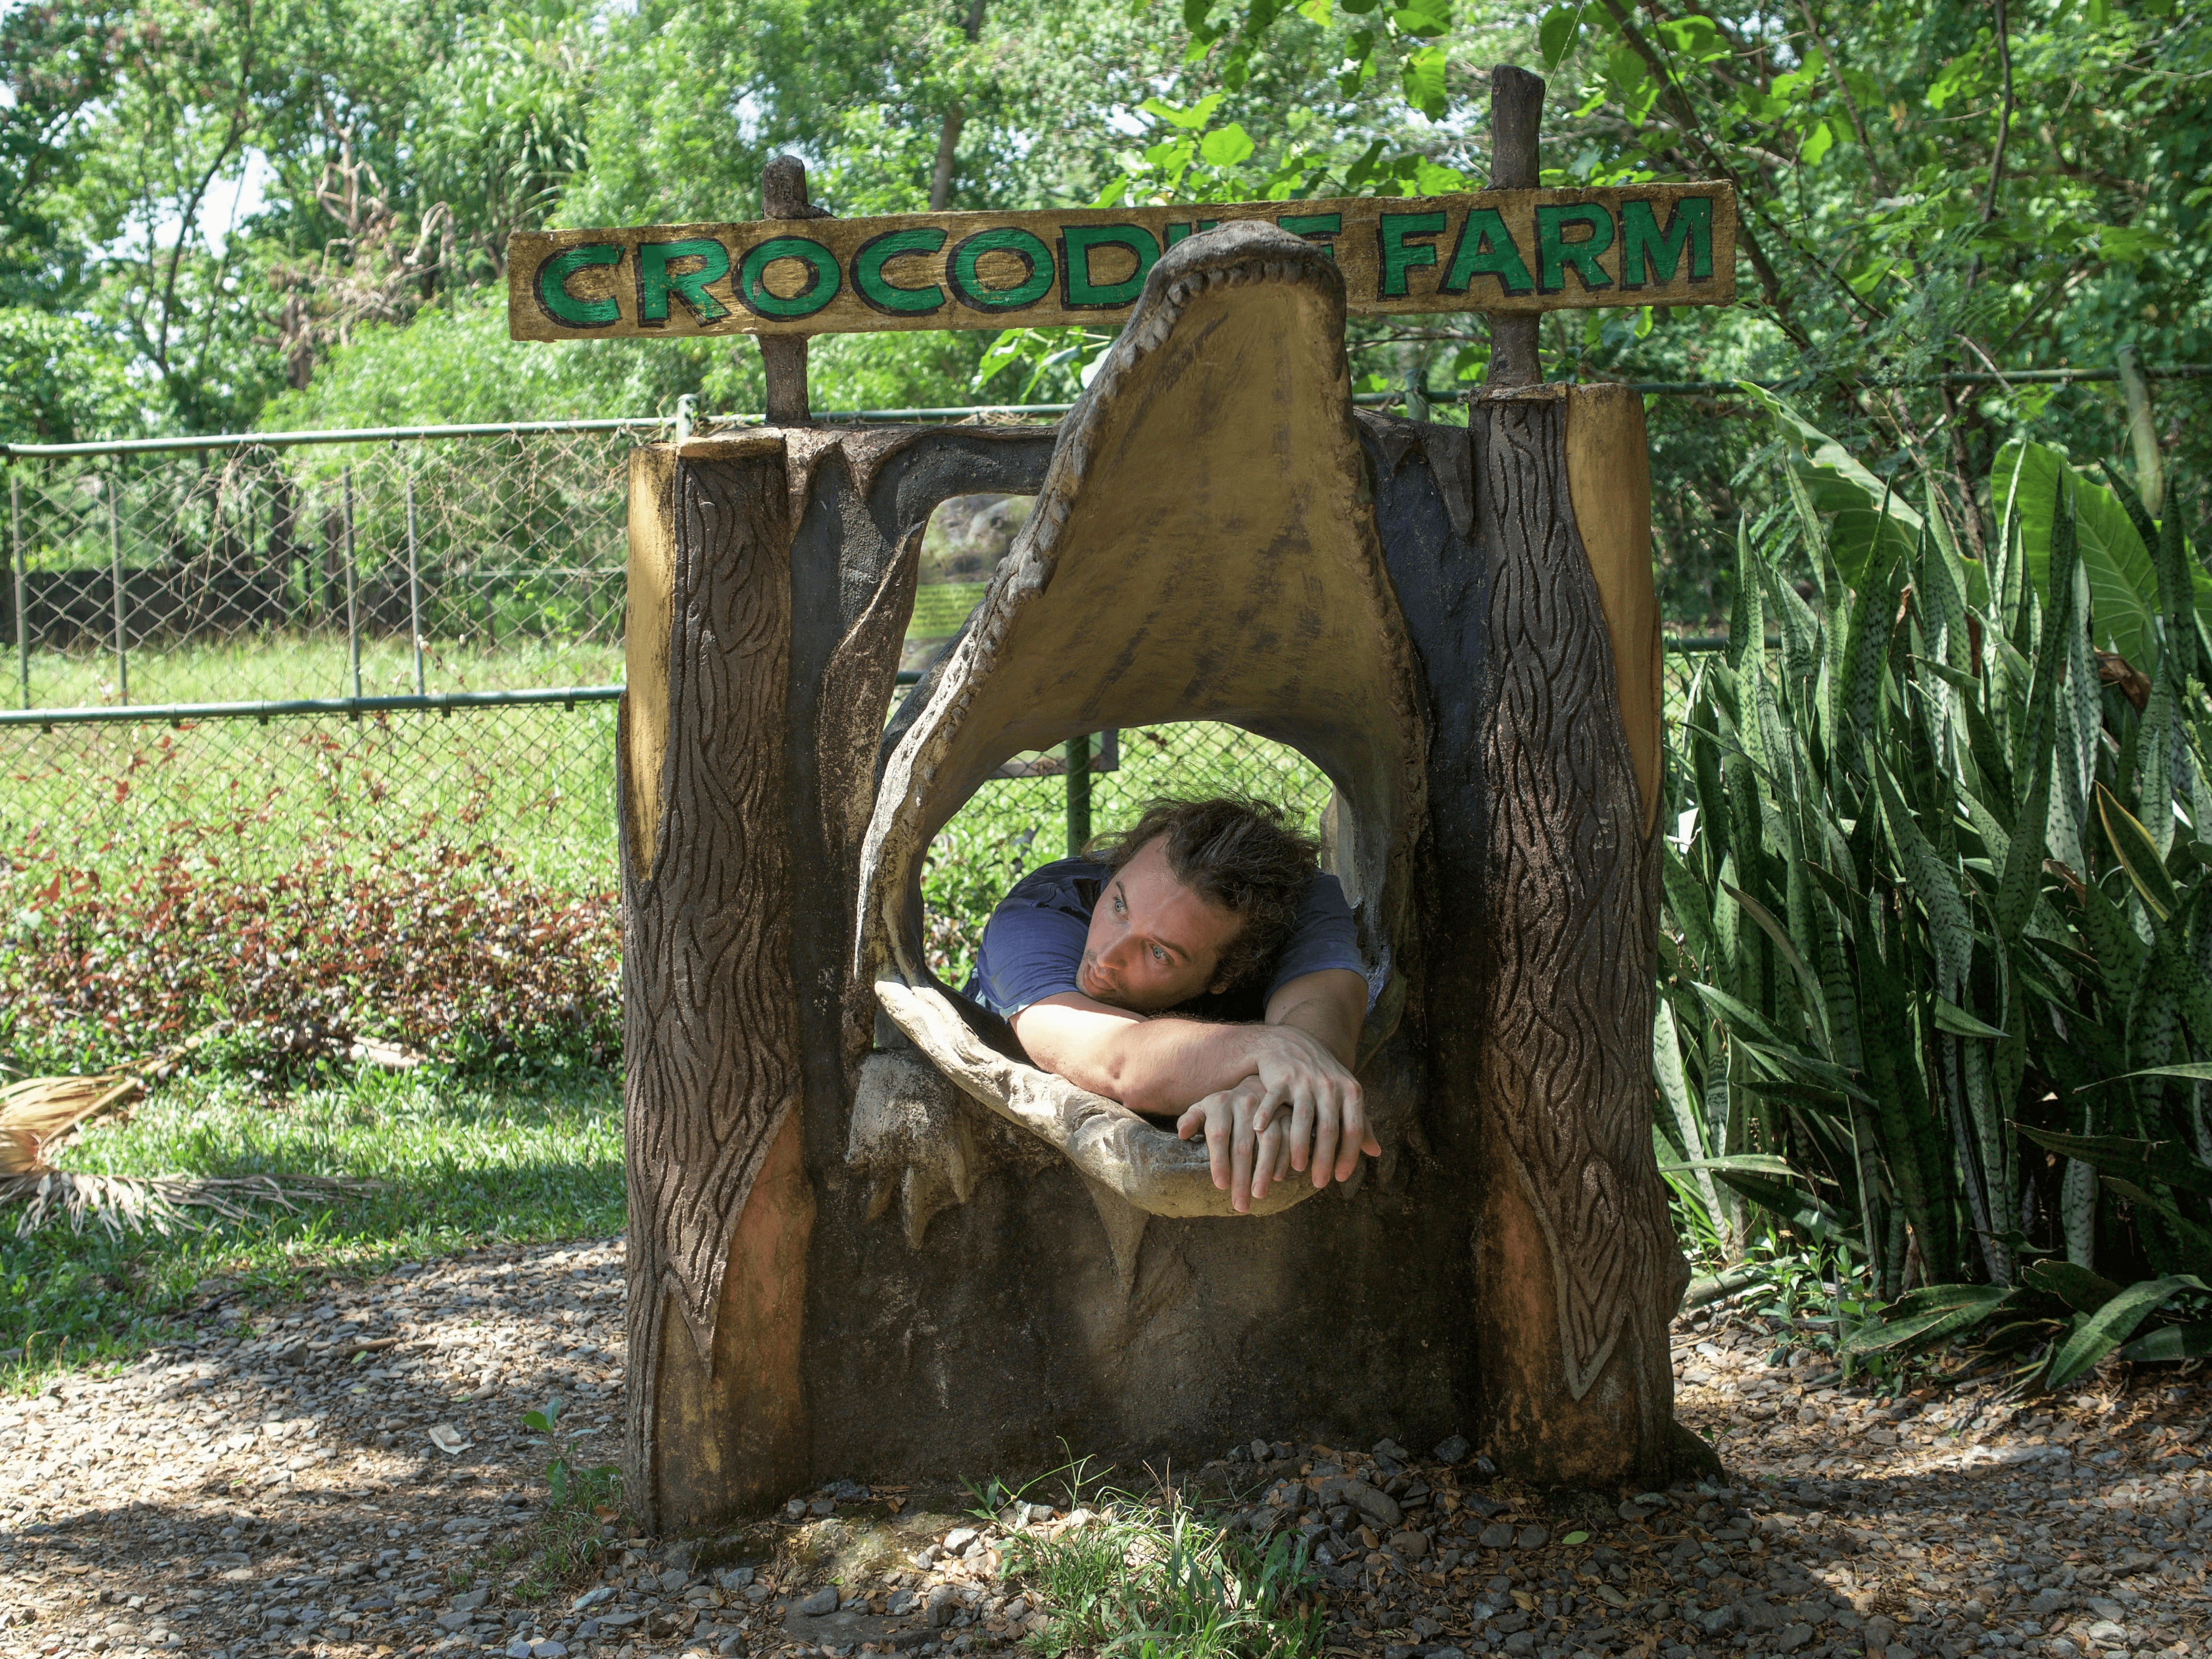 lenny through paradise stuck in crocodile mouth in puerto princesa crocodile farm palawan philippines